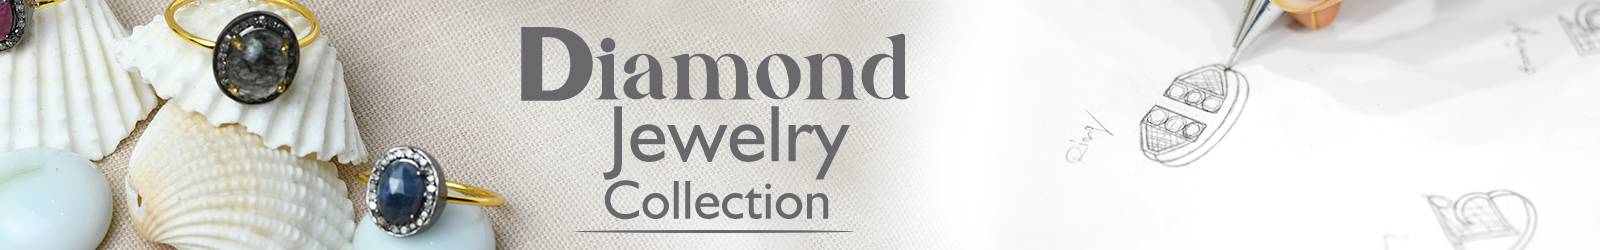 Diamond jewelry maker from India